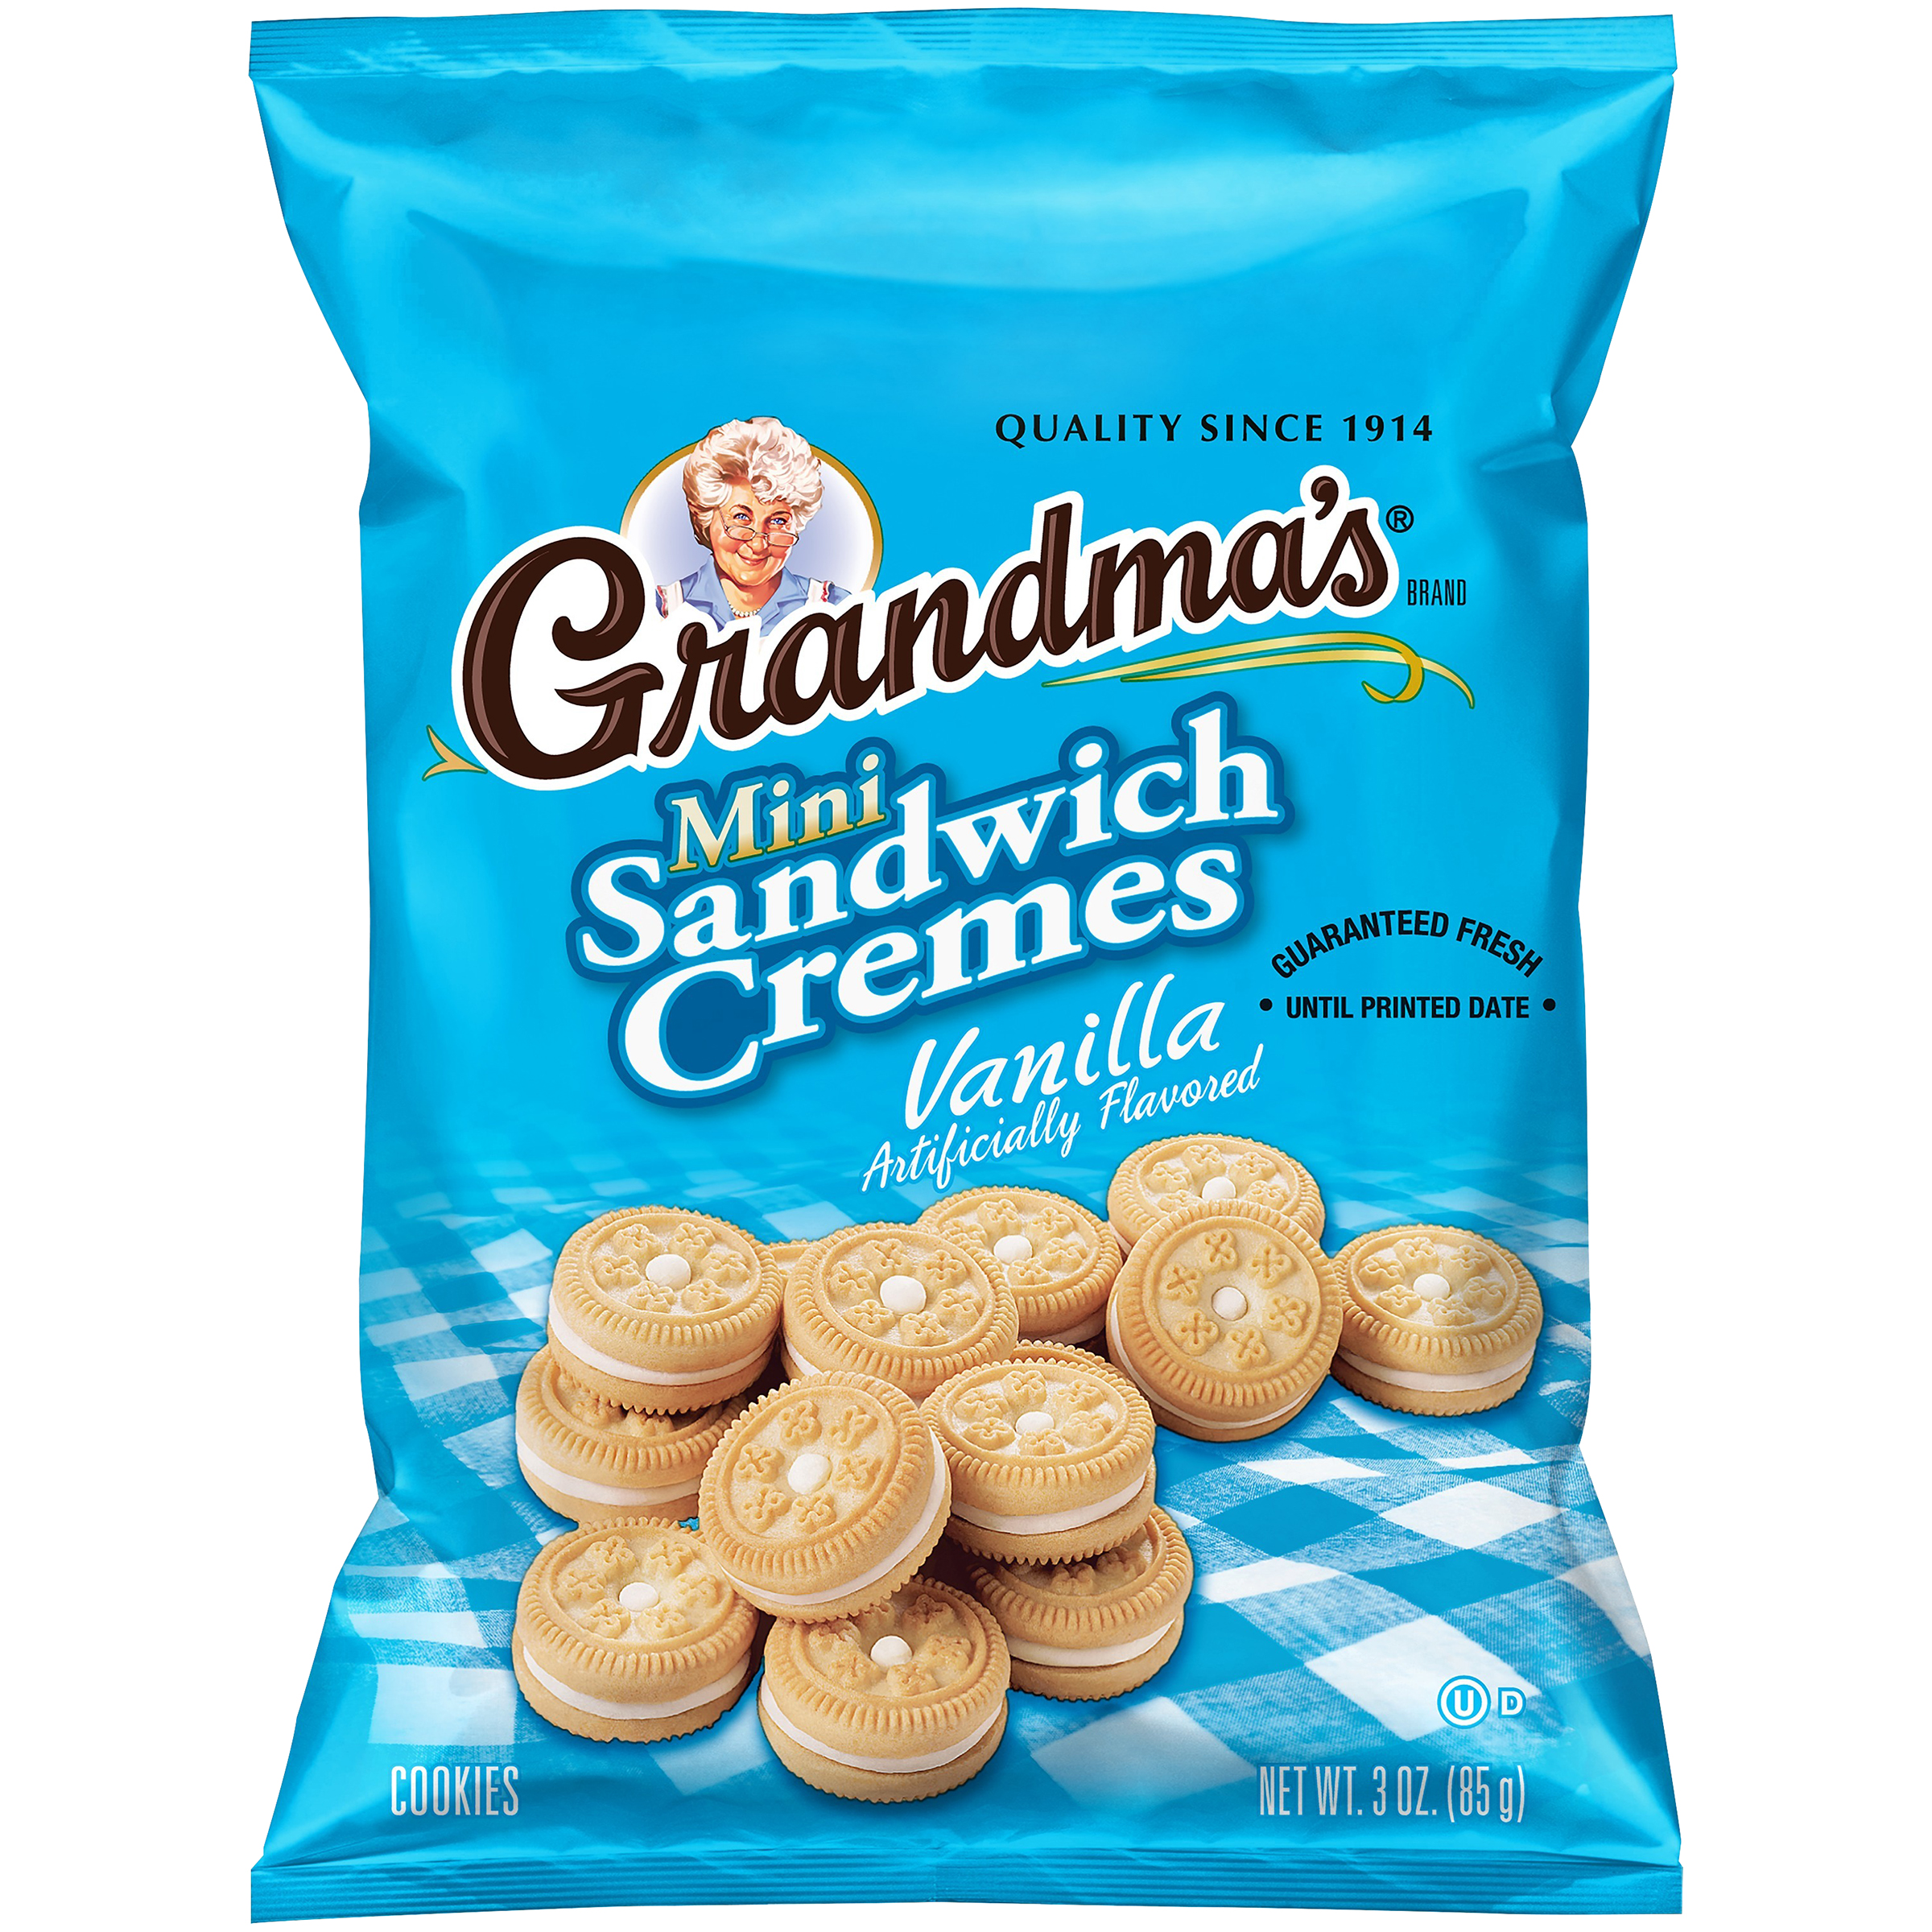 Grandma cookies. For Style печенье. Печенье grandmas Chocolate Chip 70.8 g America. Vanilla cookies twitter. Печенье grandmas Chocolate Brownie 70.8 g America.